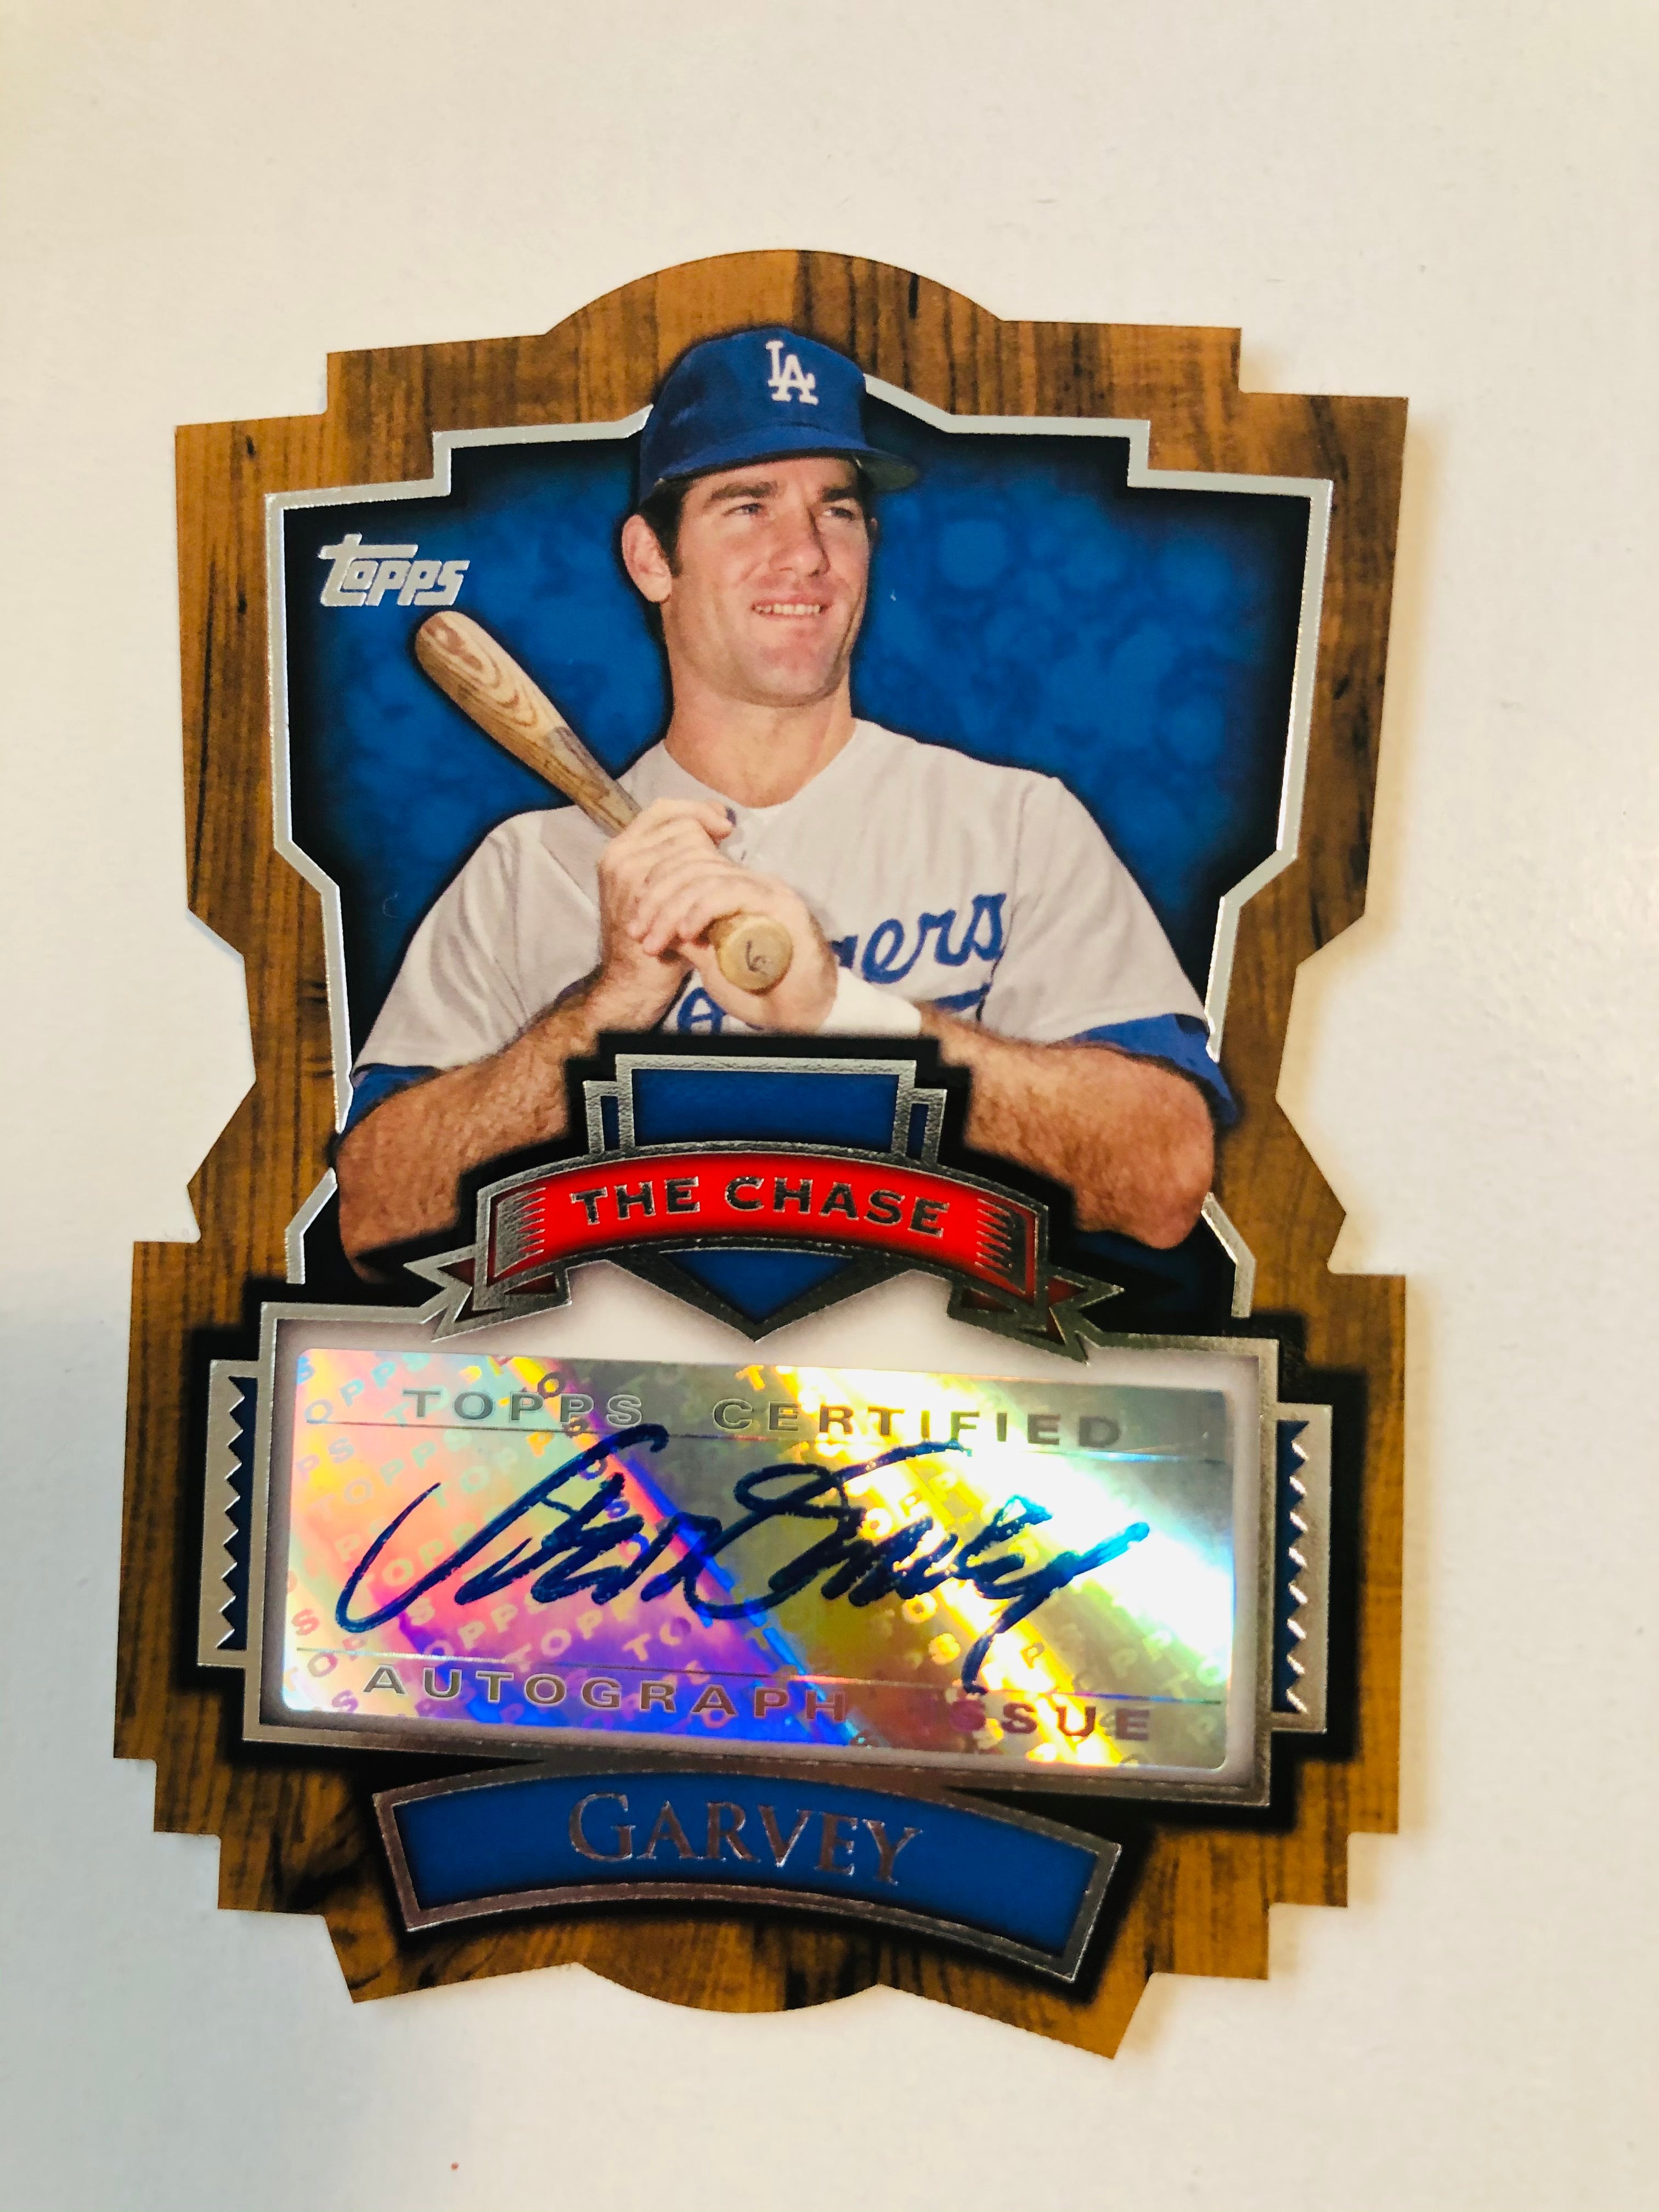 Steve Garvey LA Dodgers Topps autograph insert card